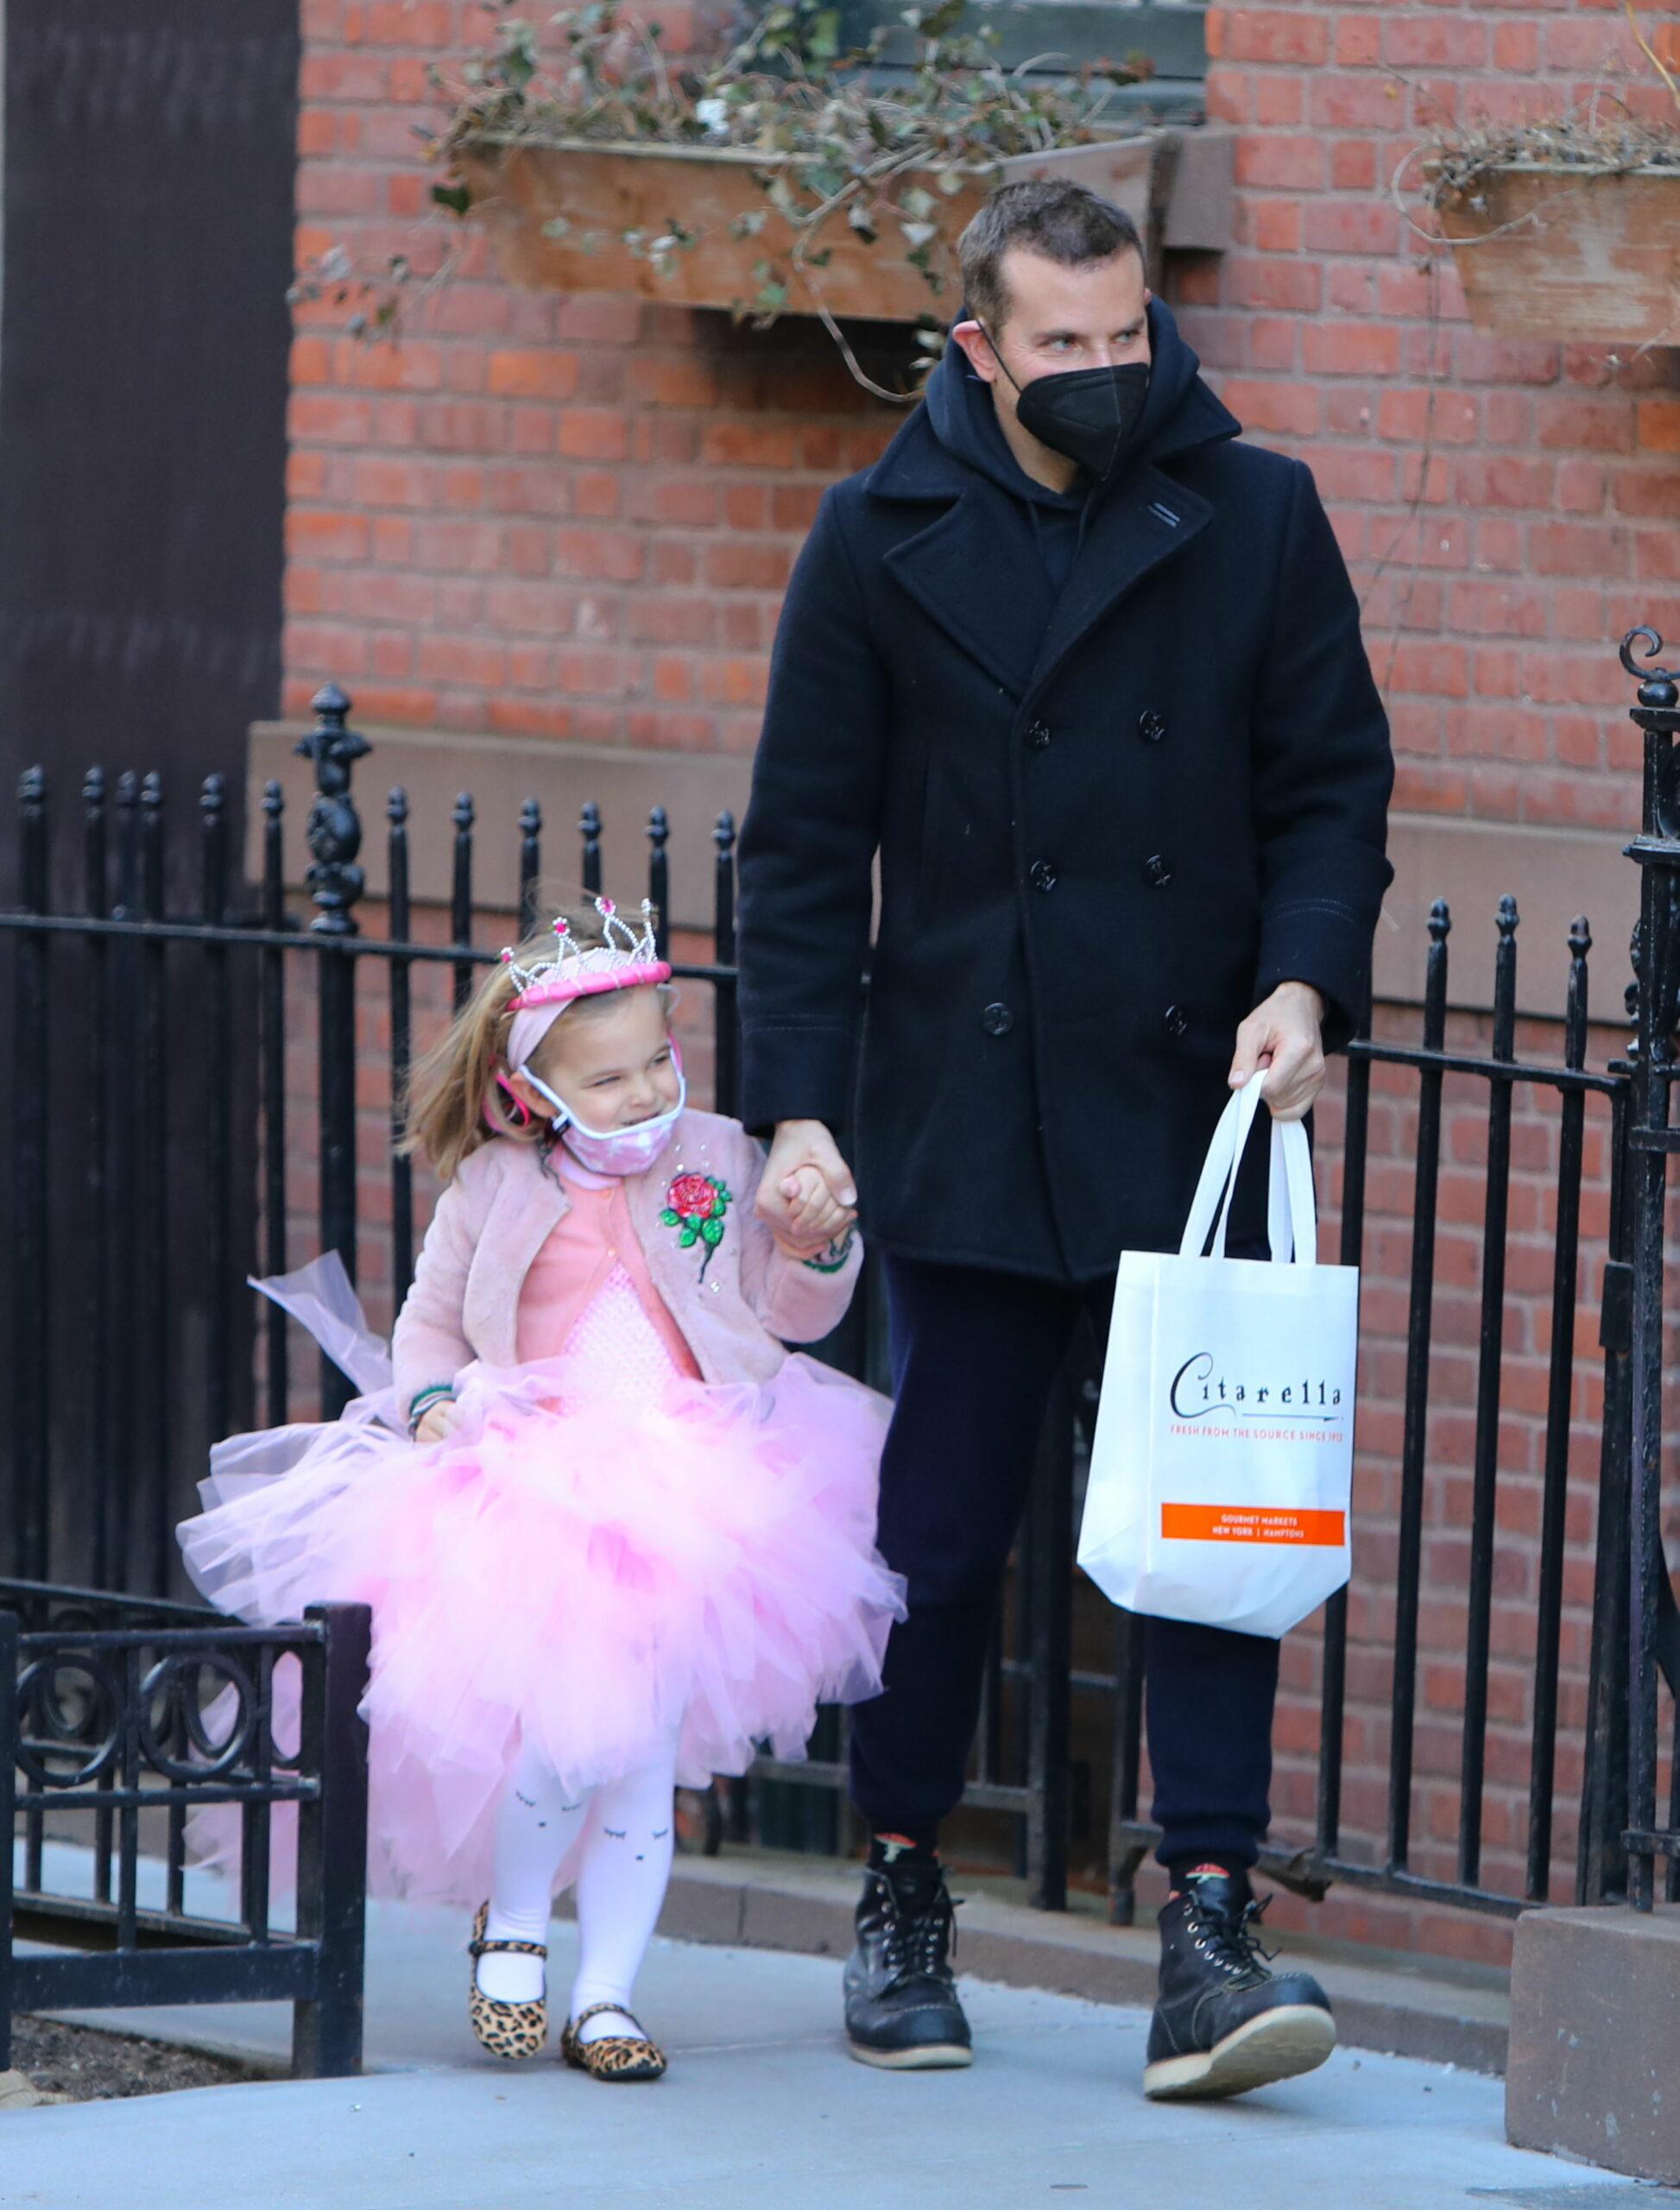 Bradley Cooper walking with daughter, Lea